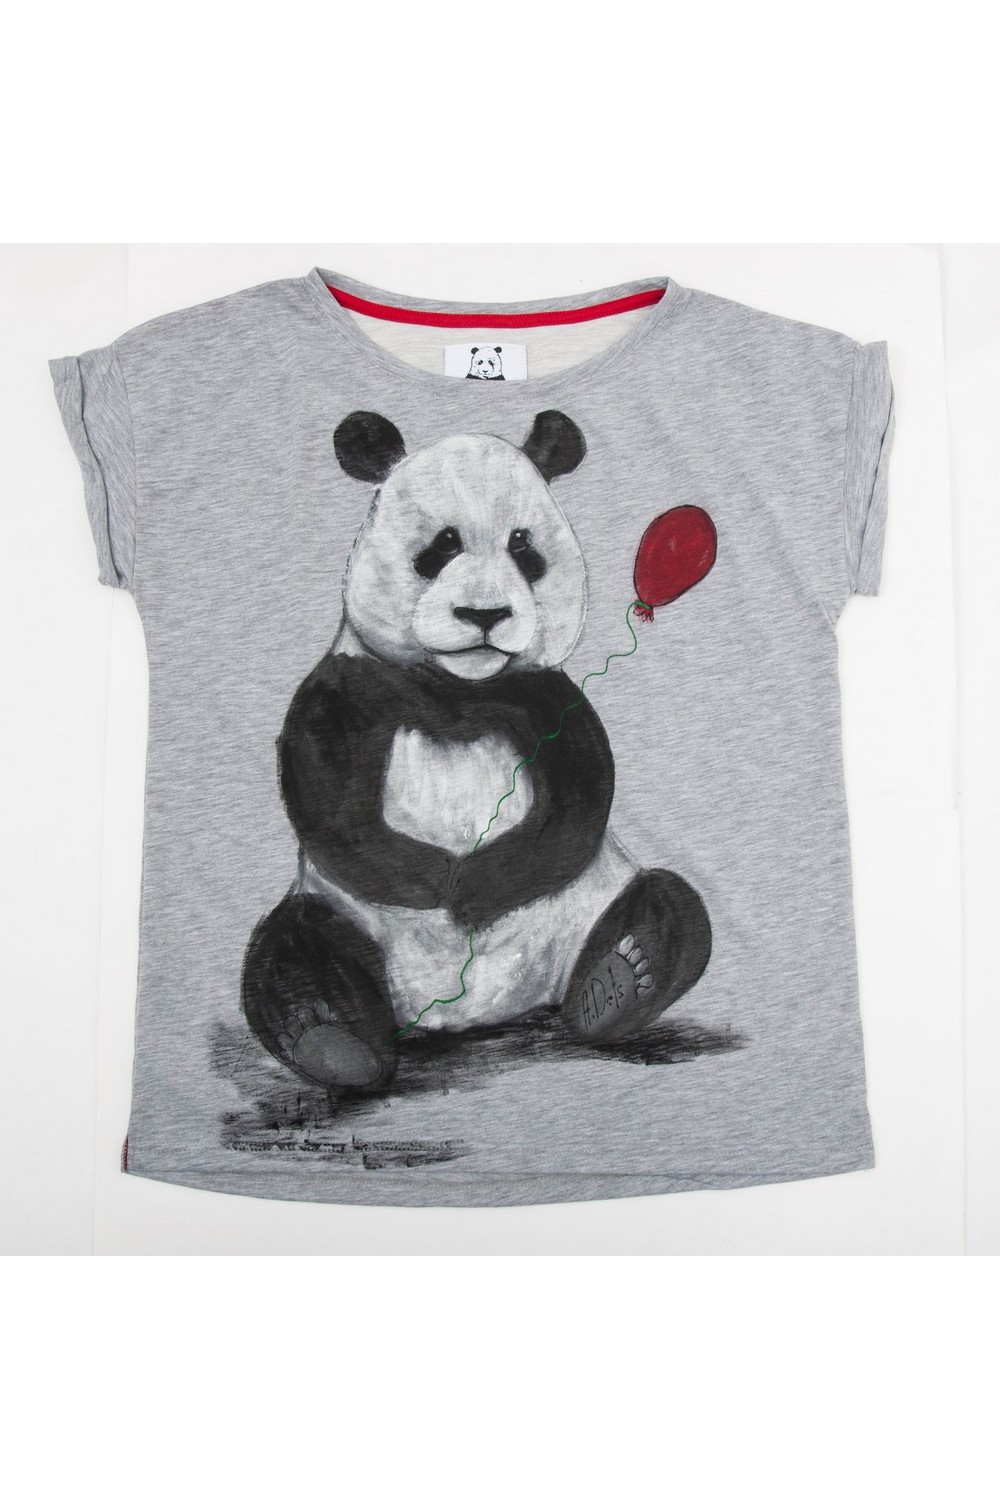 Buy Designer Women`s Grey Cotton Print tee shirt , Short sleeve Panda tshirt, Unique stylish t shirt